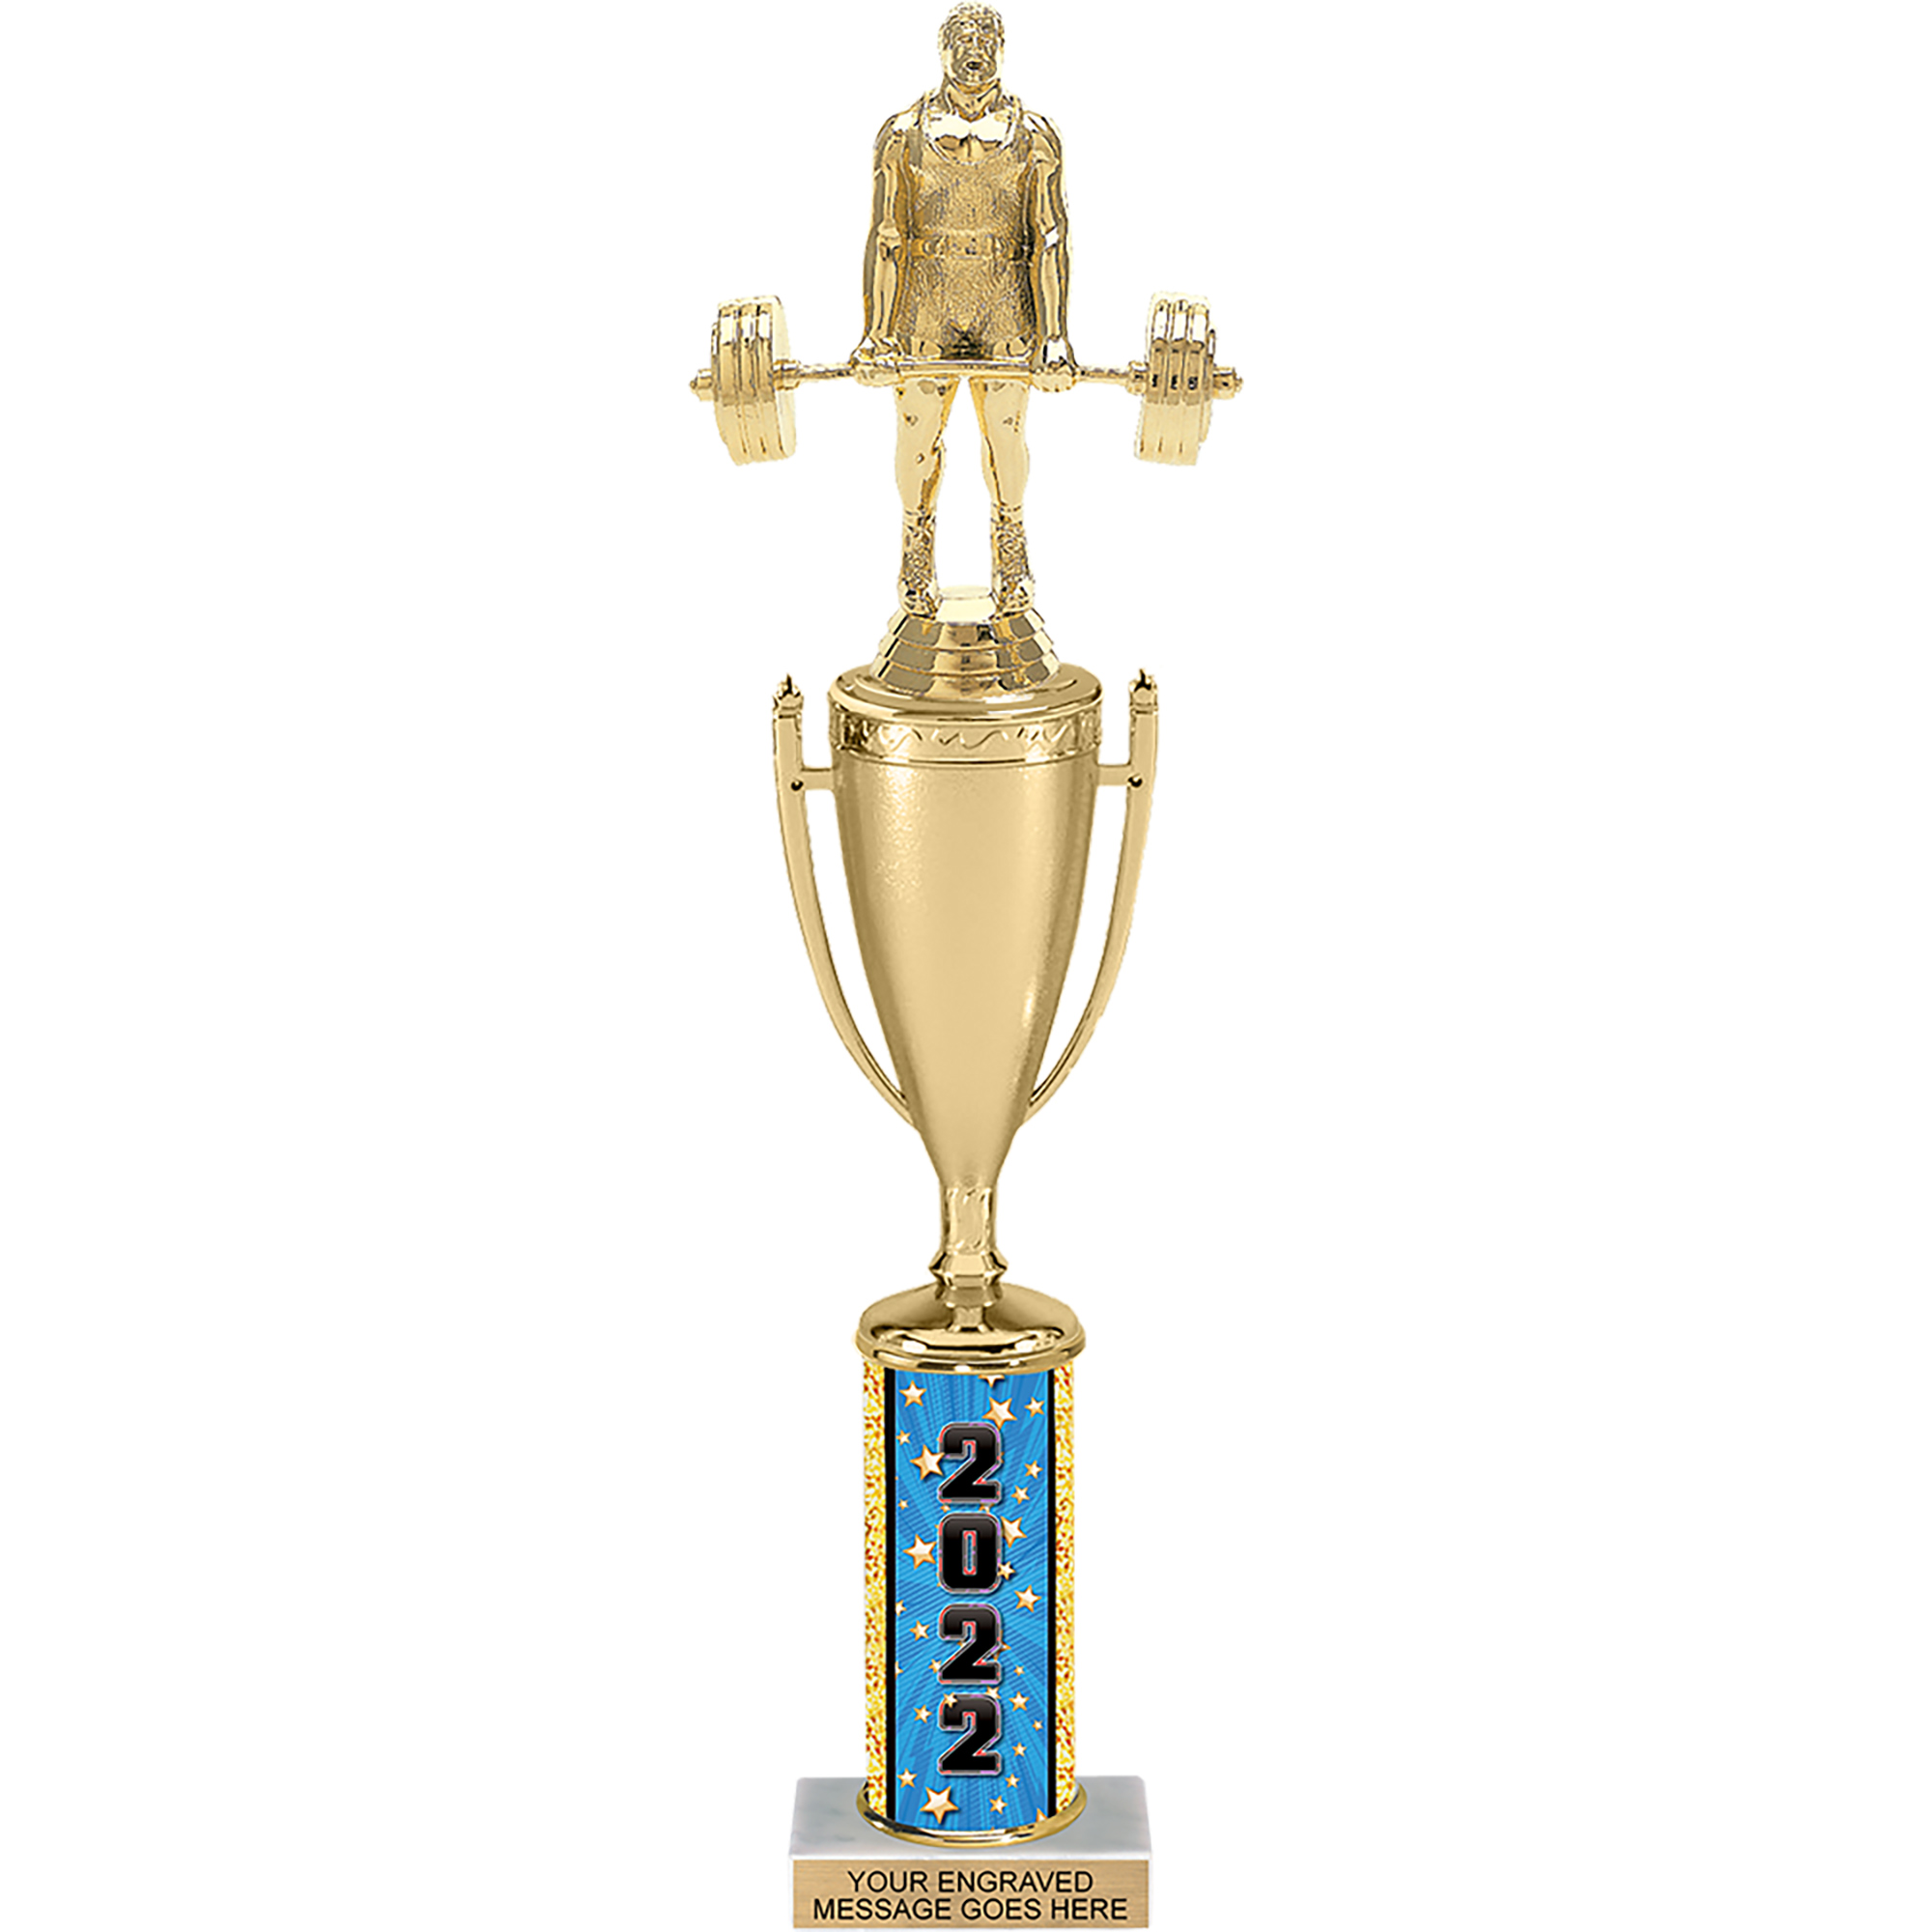 Comic Stars Column Cup Trophy 2022 - 15 inch